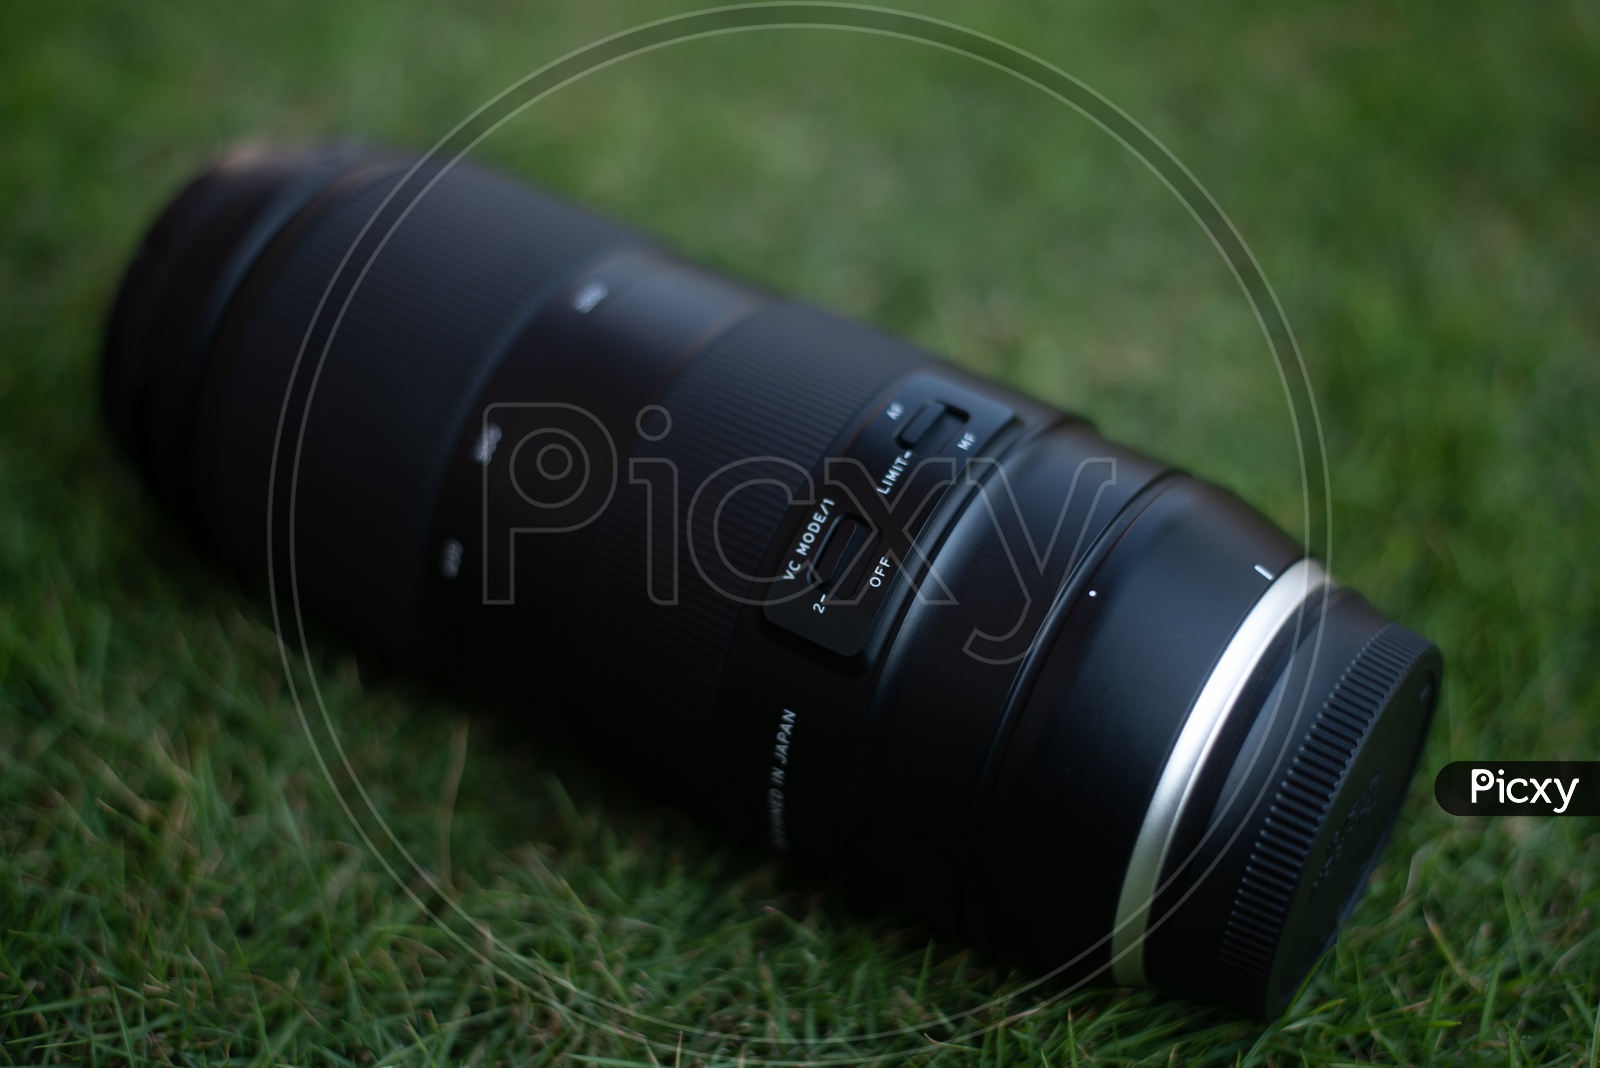 Tamron 100-400 mm Teloephoto DSLR Lens Over Lawn Garden Green Grass Background